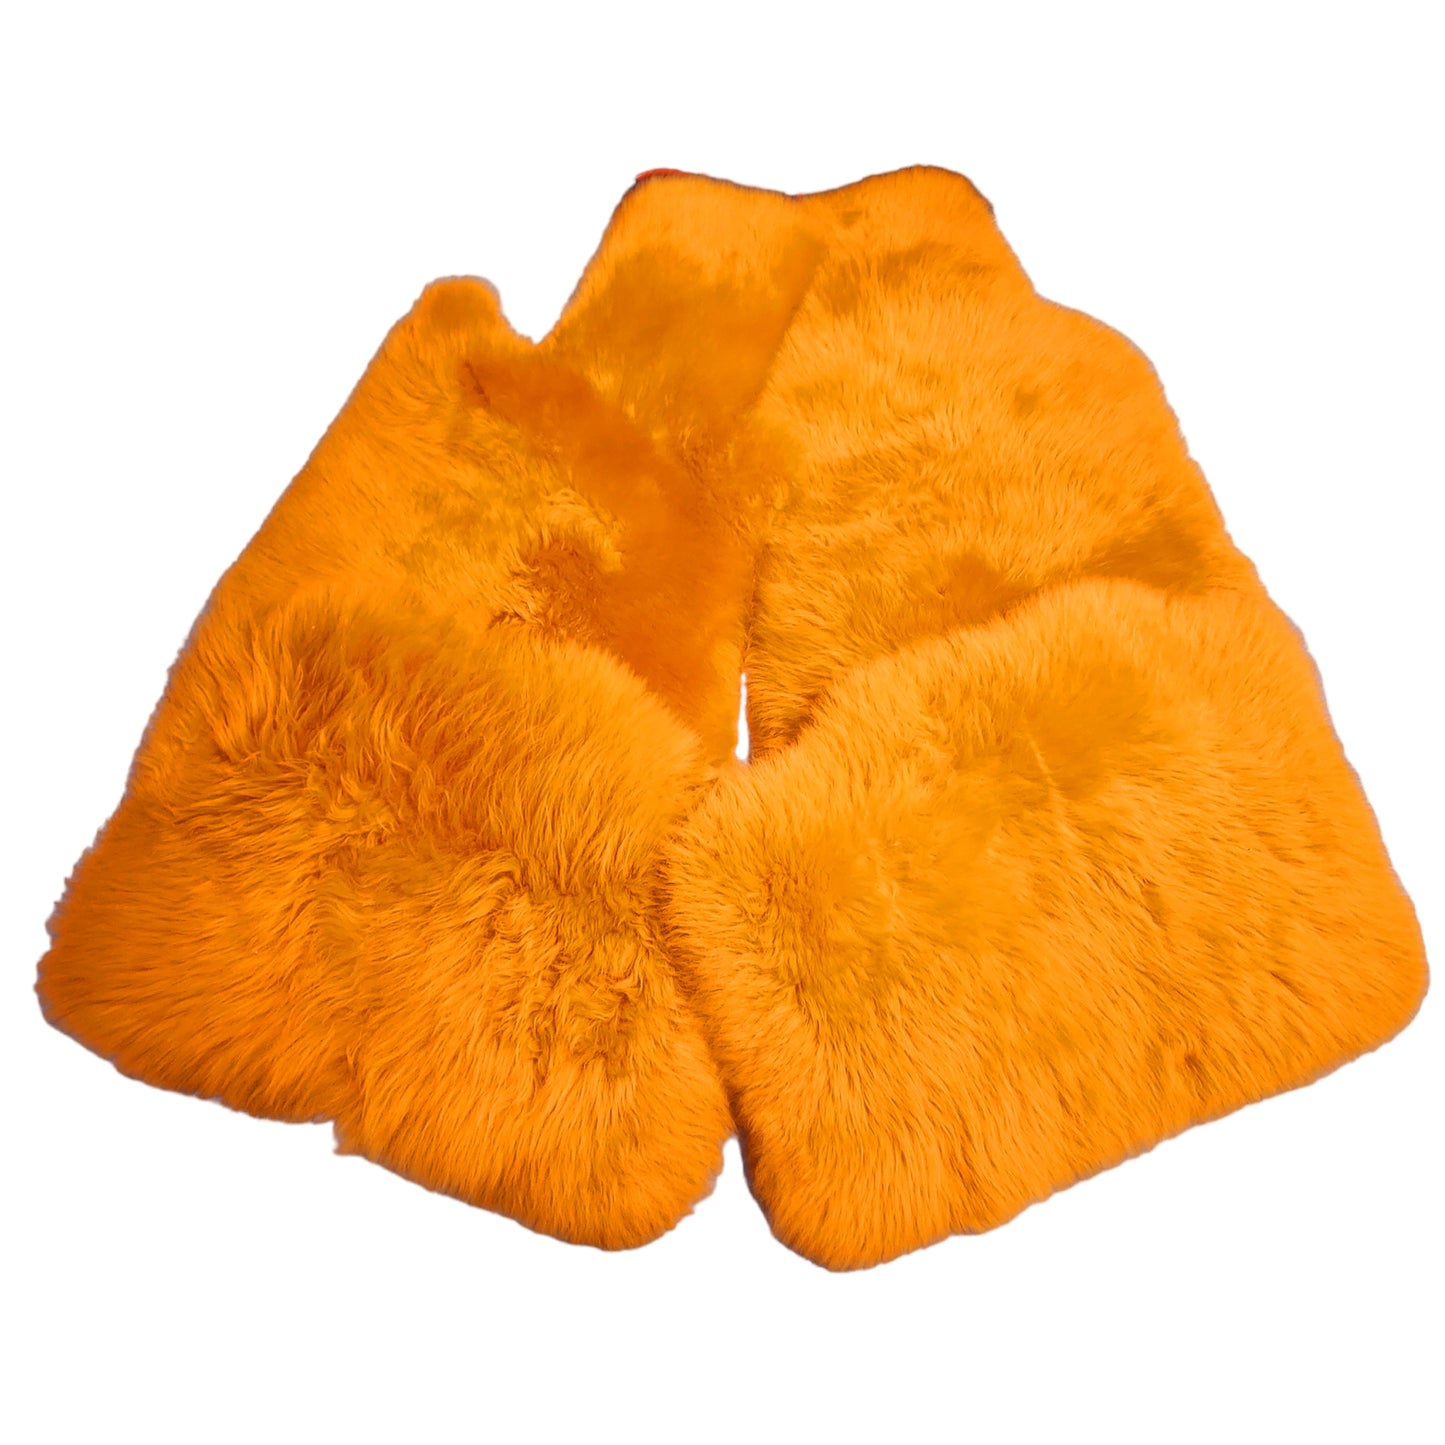 Mogul Mats Genuine Sheepskin Floor Mats Shown in Orange